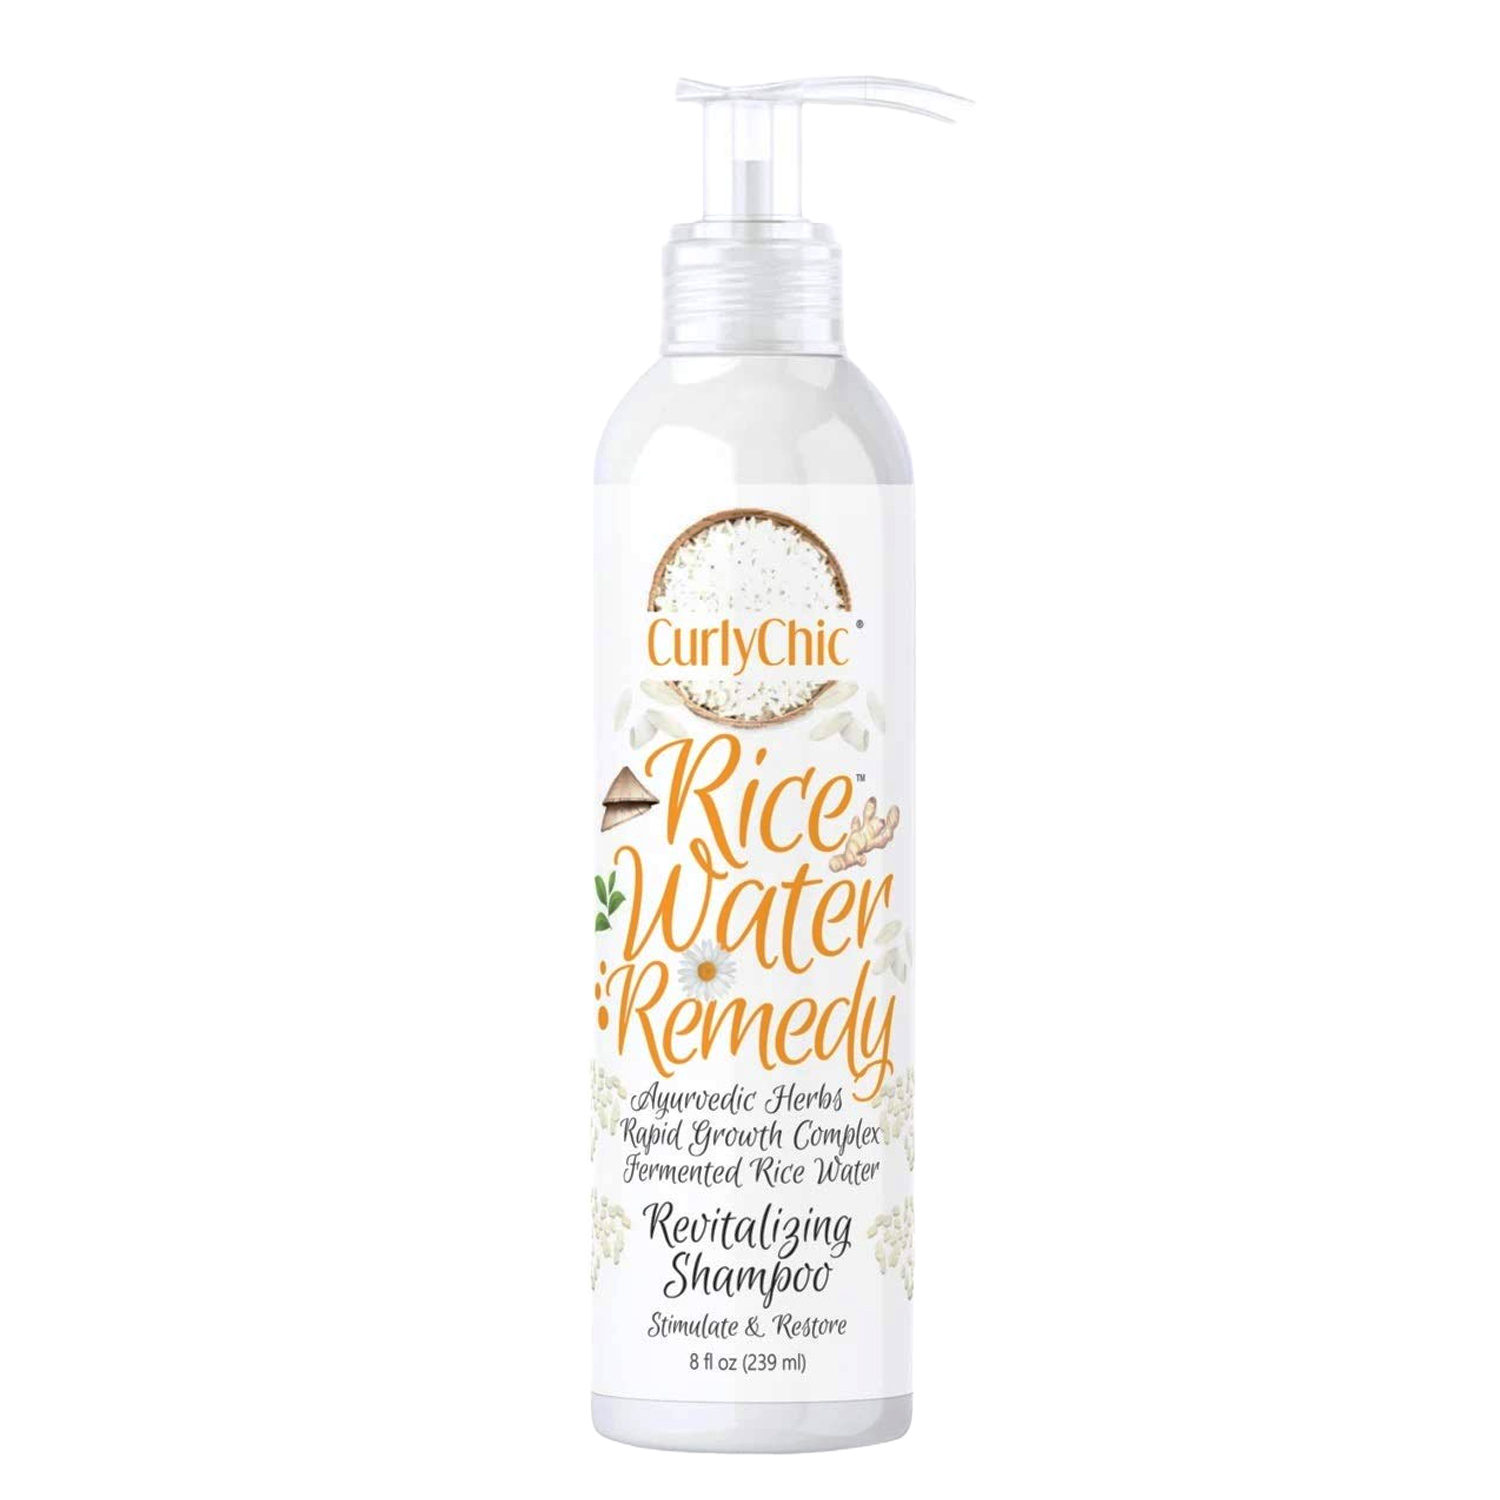 CurlyChic Rice Water Remedy Revitalizing Shampoo 8oz